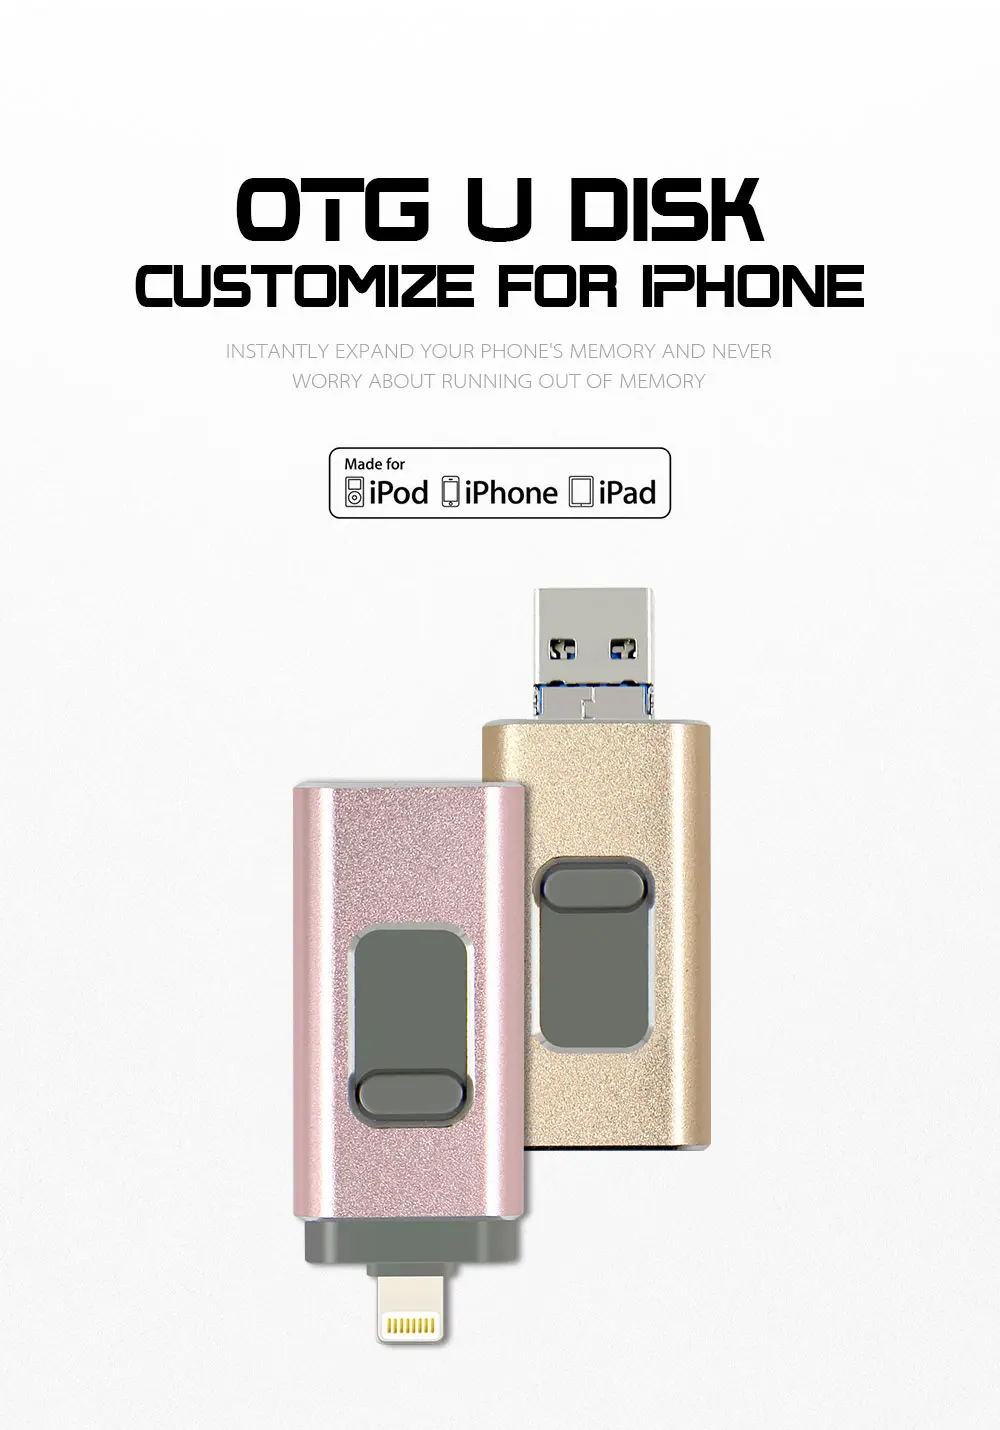 IOS USB флэш-накопитель для iPhone X/8/7/7 Plus/6 Plus/6s/5/SE/ipad портативный флэш-накопитель HD флеш-накопитель 16 ГБ 32 ГБ 64 Гб 128 Гб флешки, USB флеш-карта